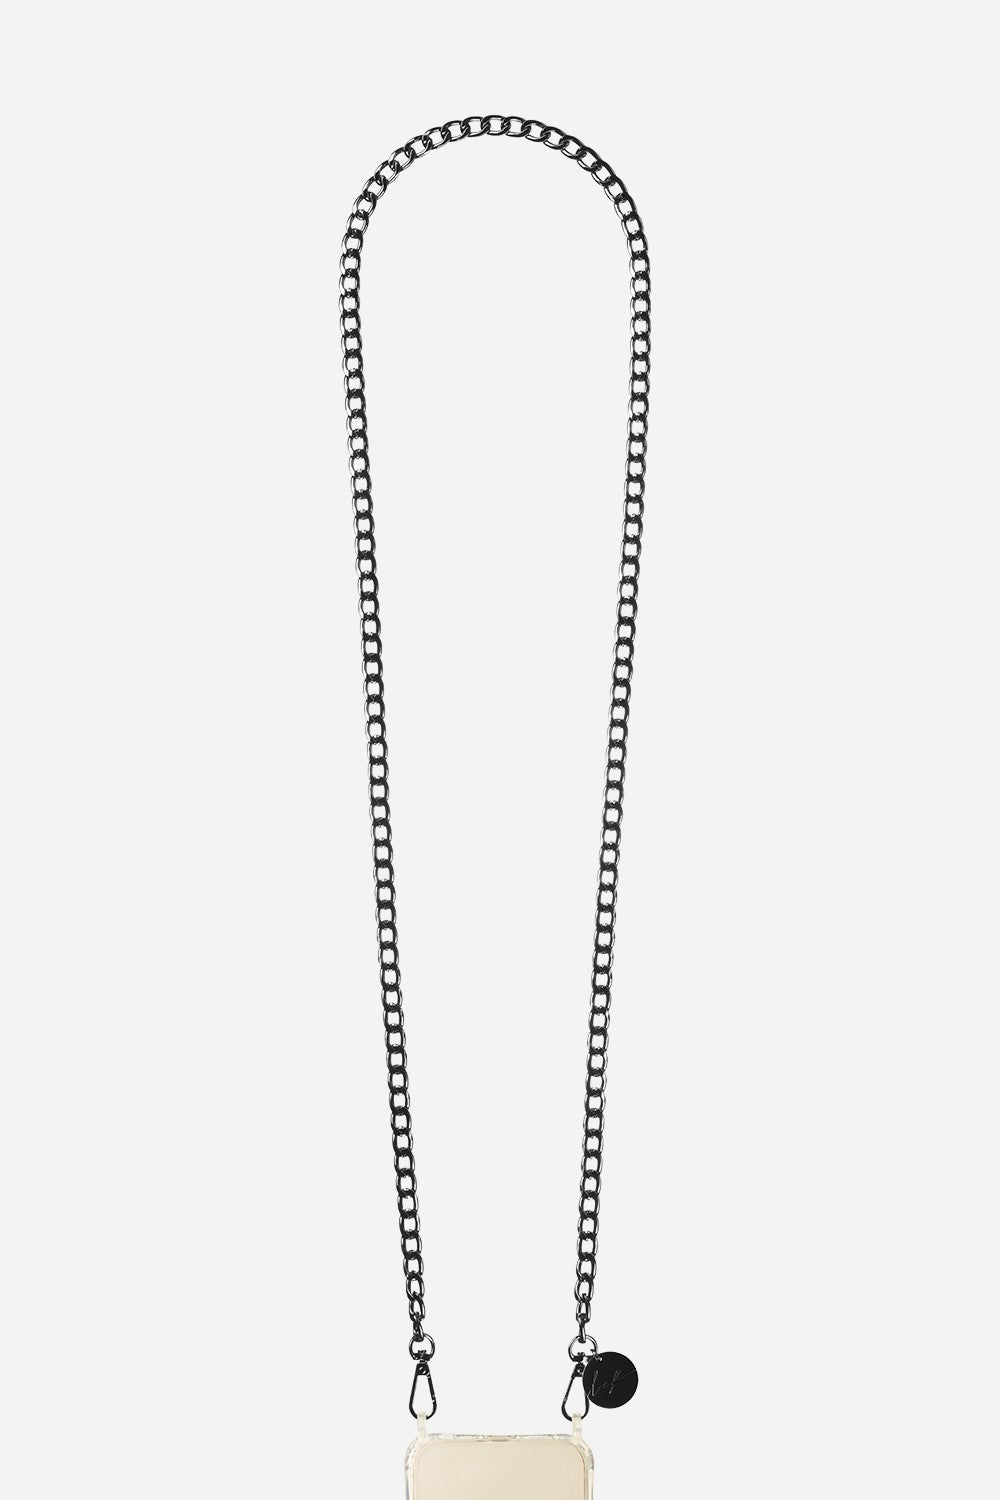 Sona Long Chain Black 120 cm